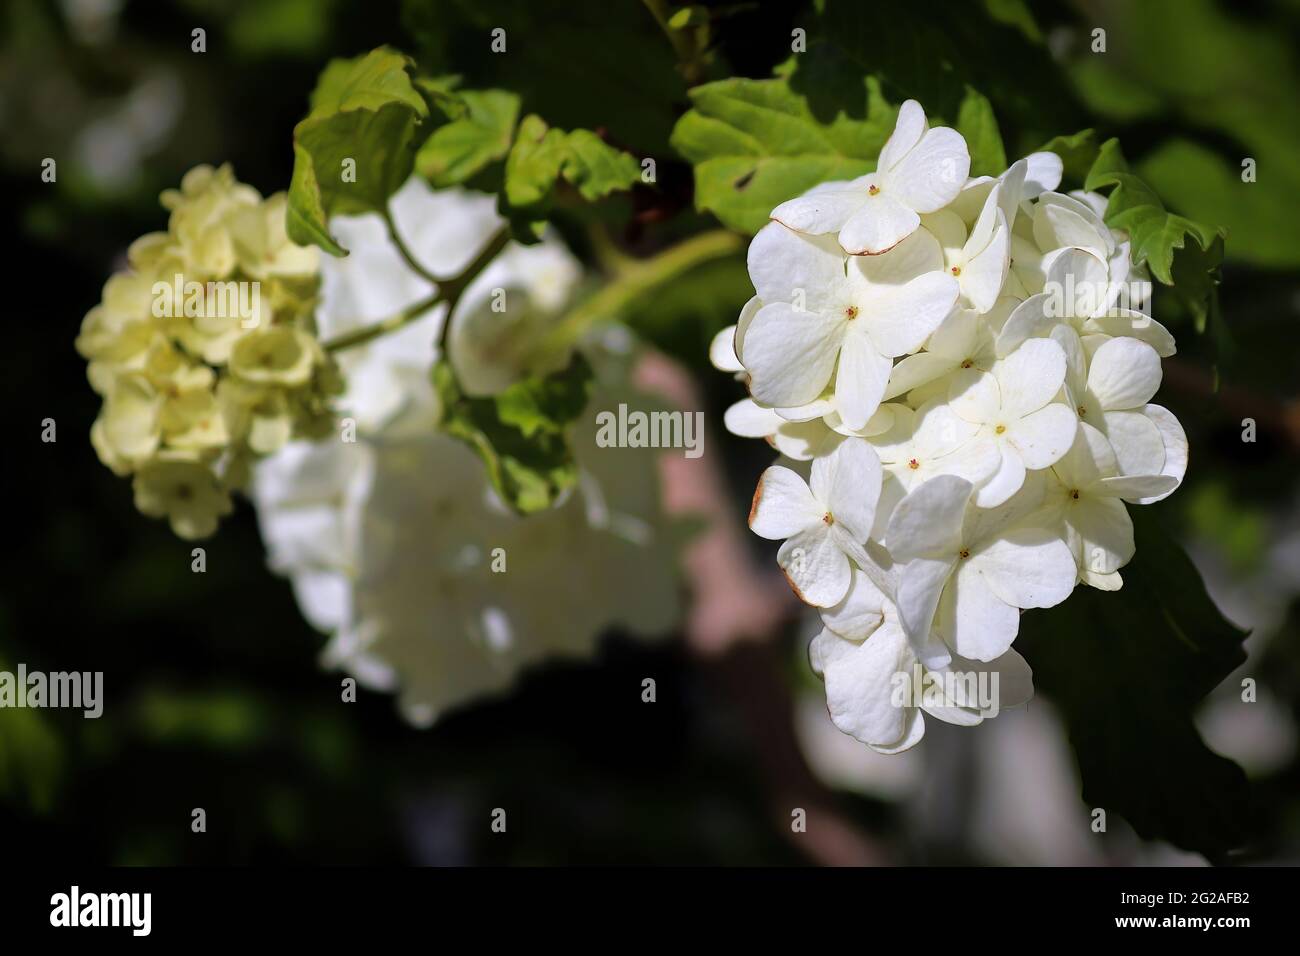 Closeup of flowers on a cranberry snowball shrub Stock Photo